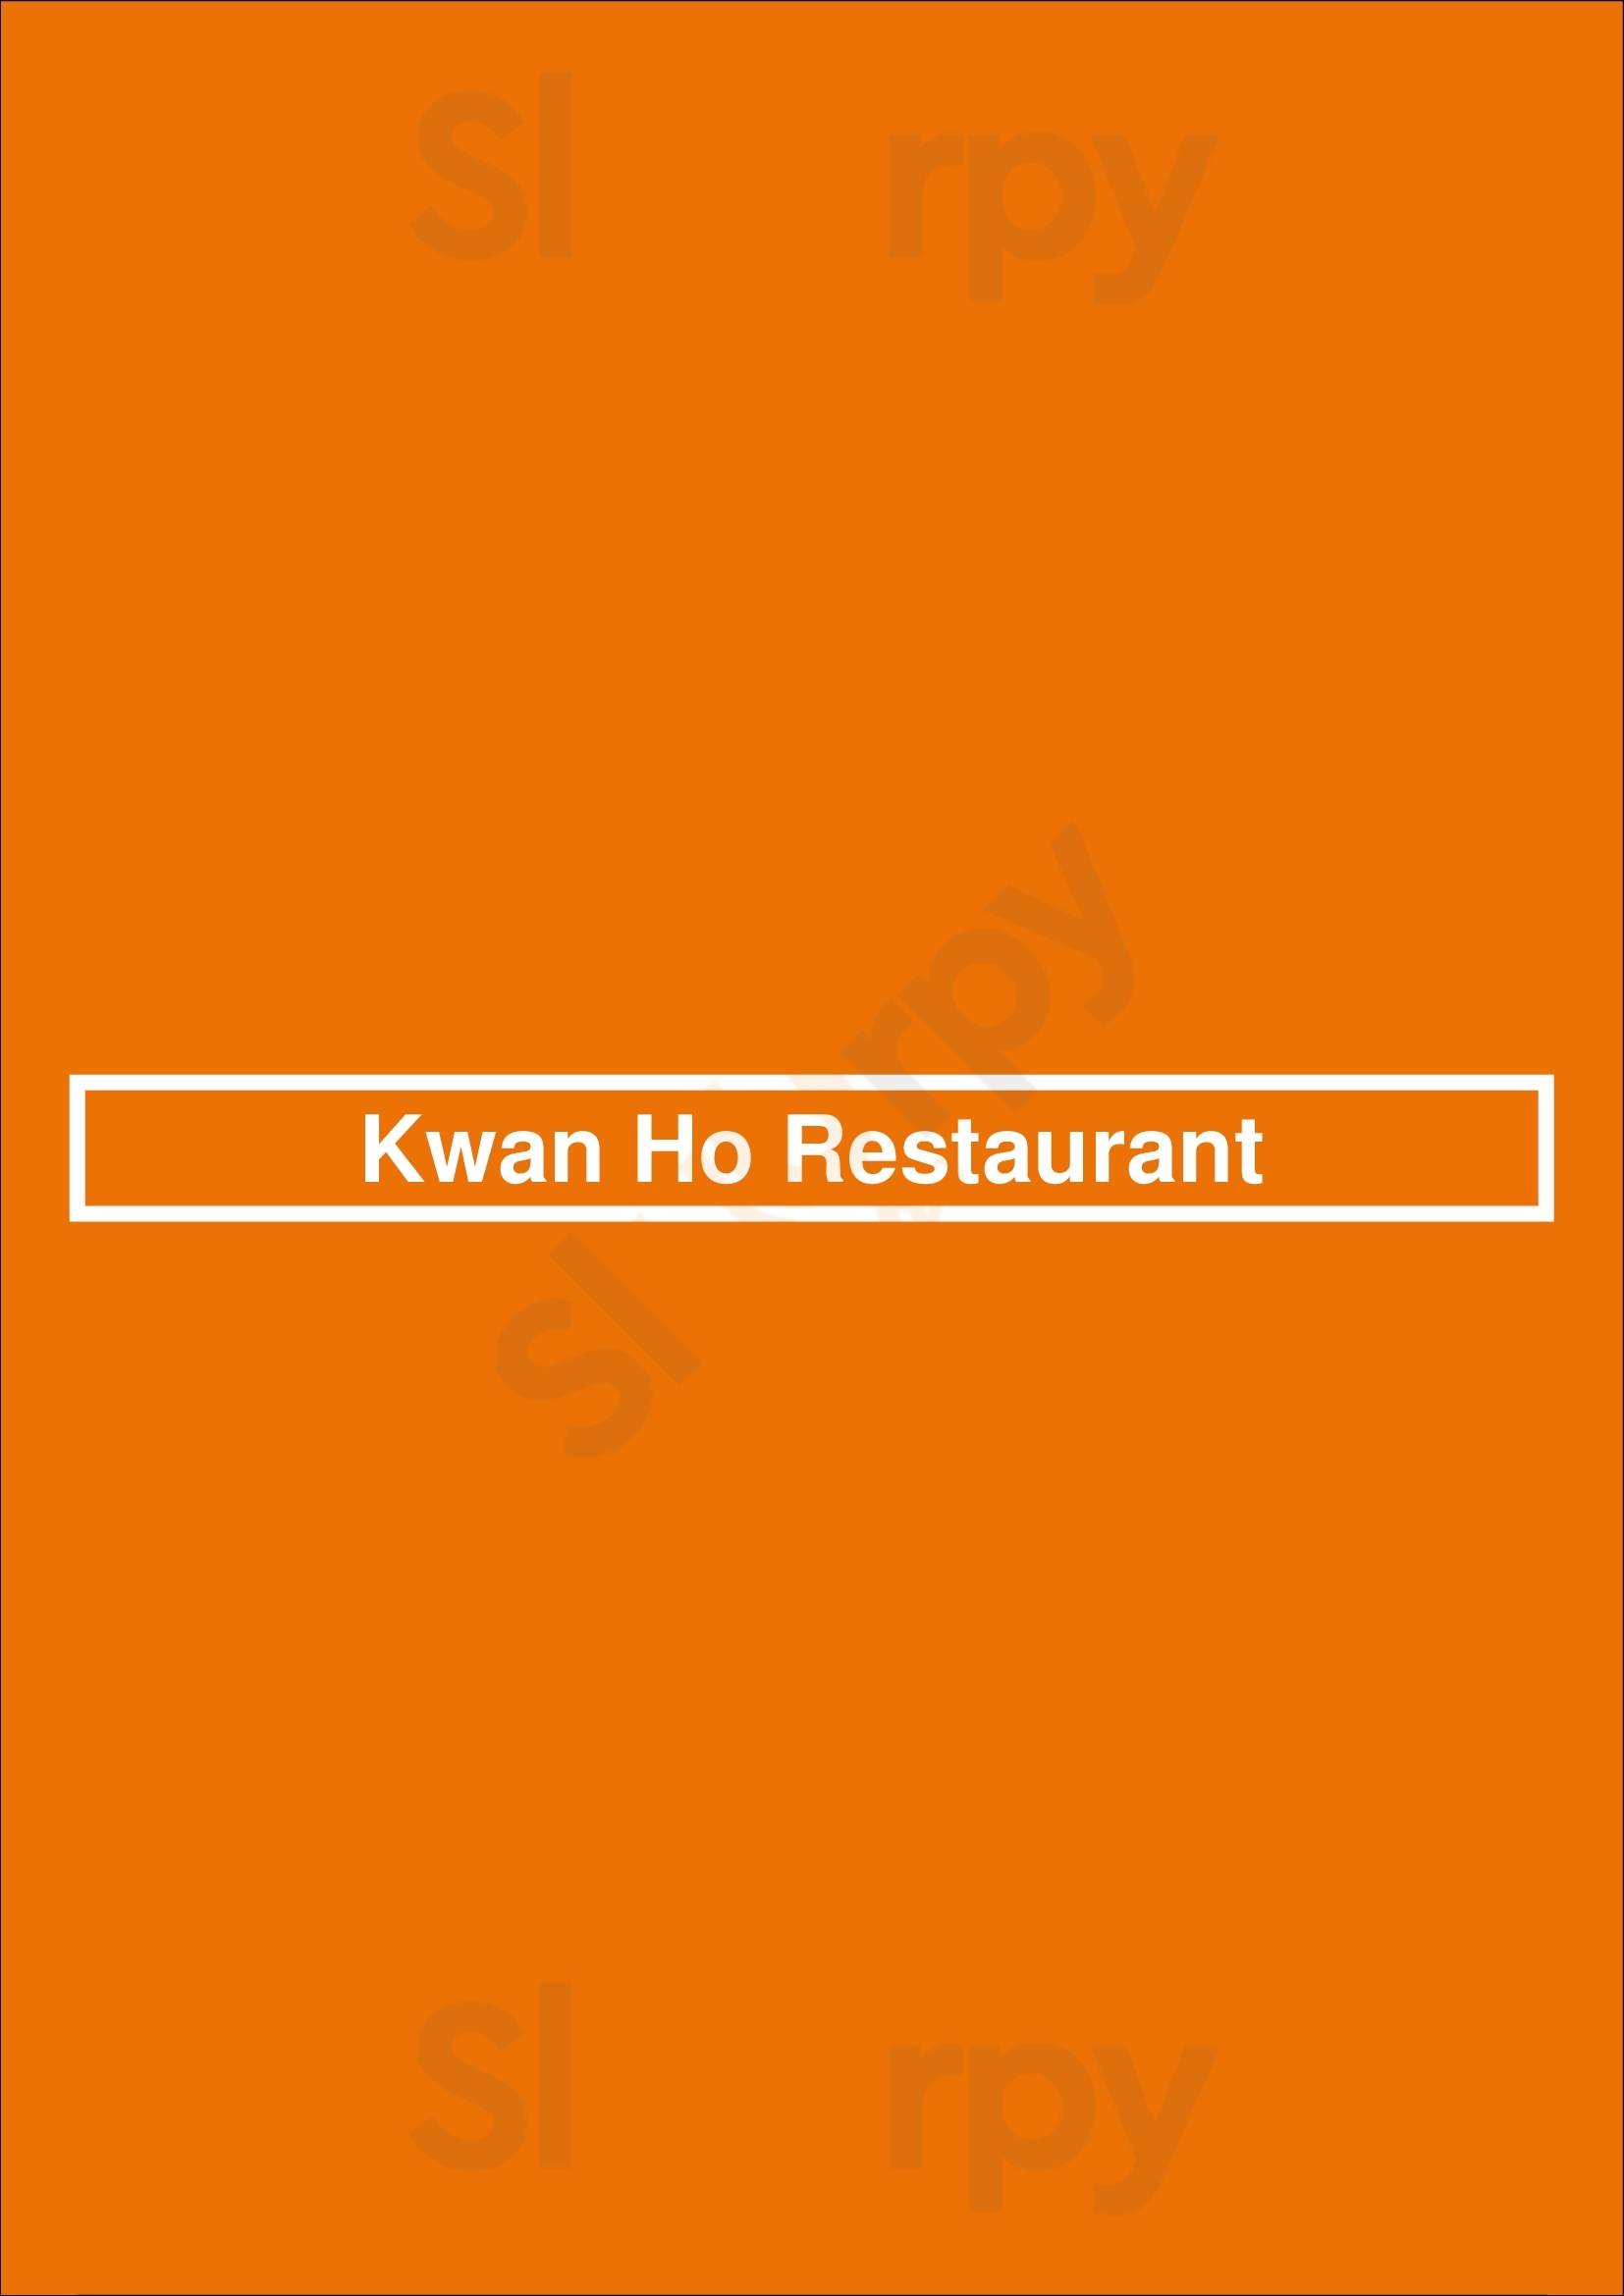 Kwan Ho Restaurant Hobart Menu - 1